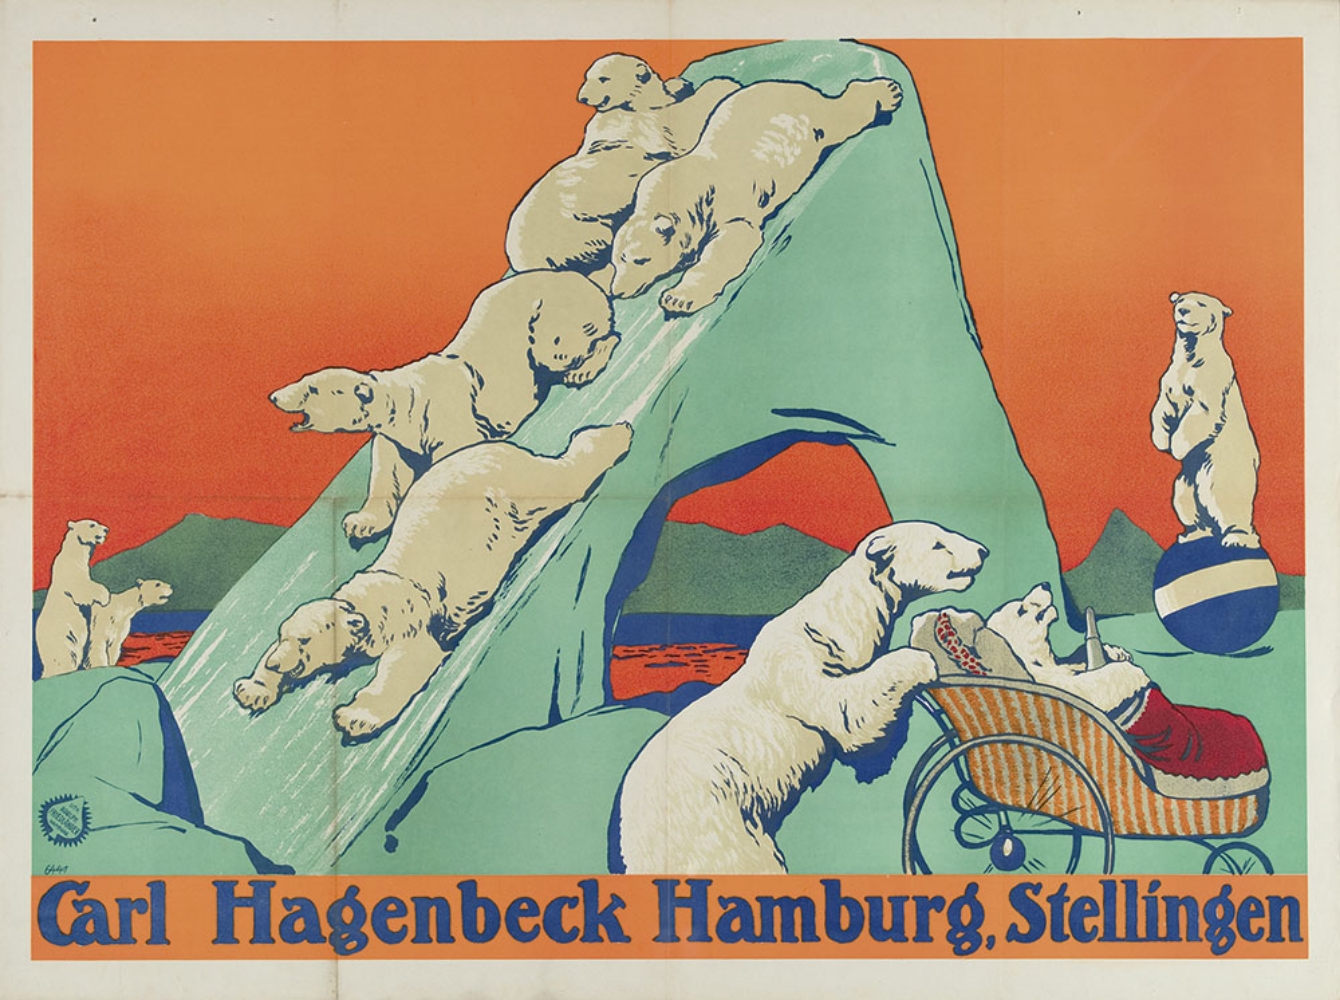 [Polar bears] Carl Hagenbeck Hamburg